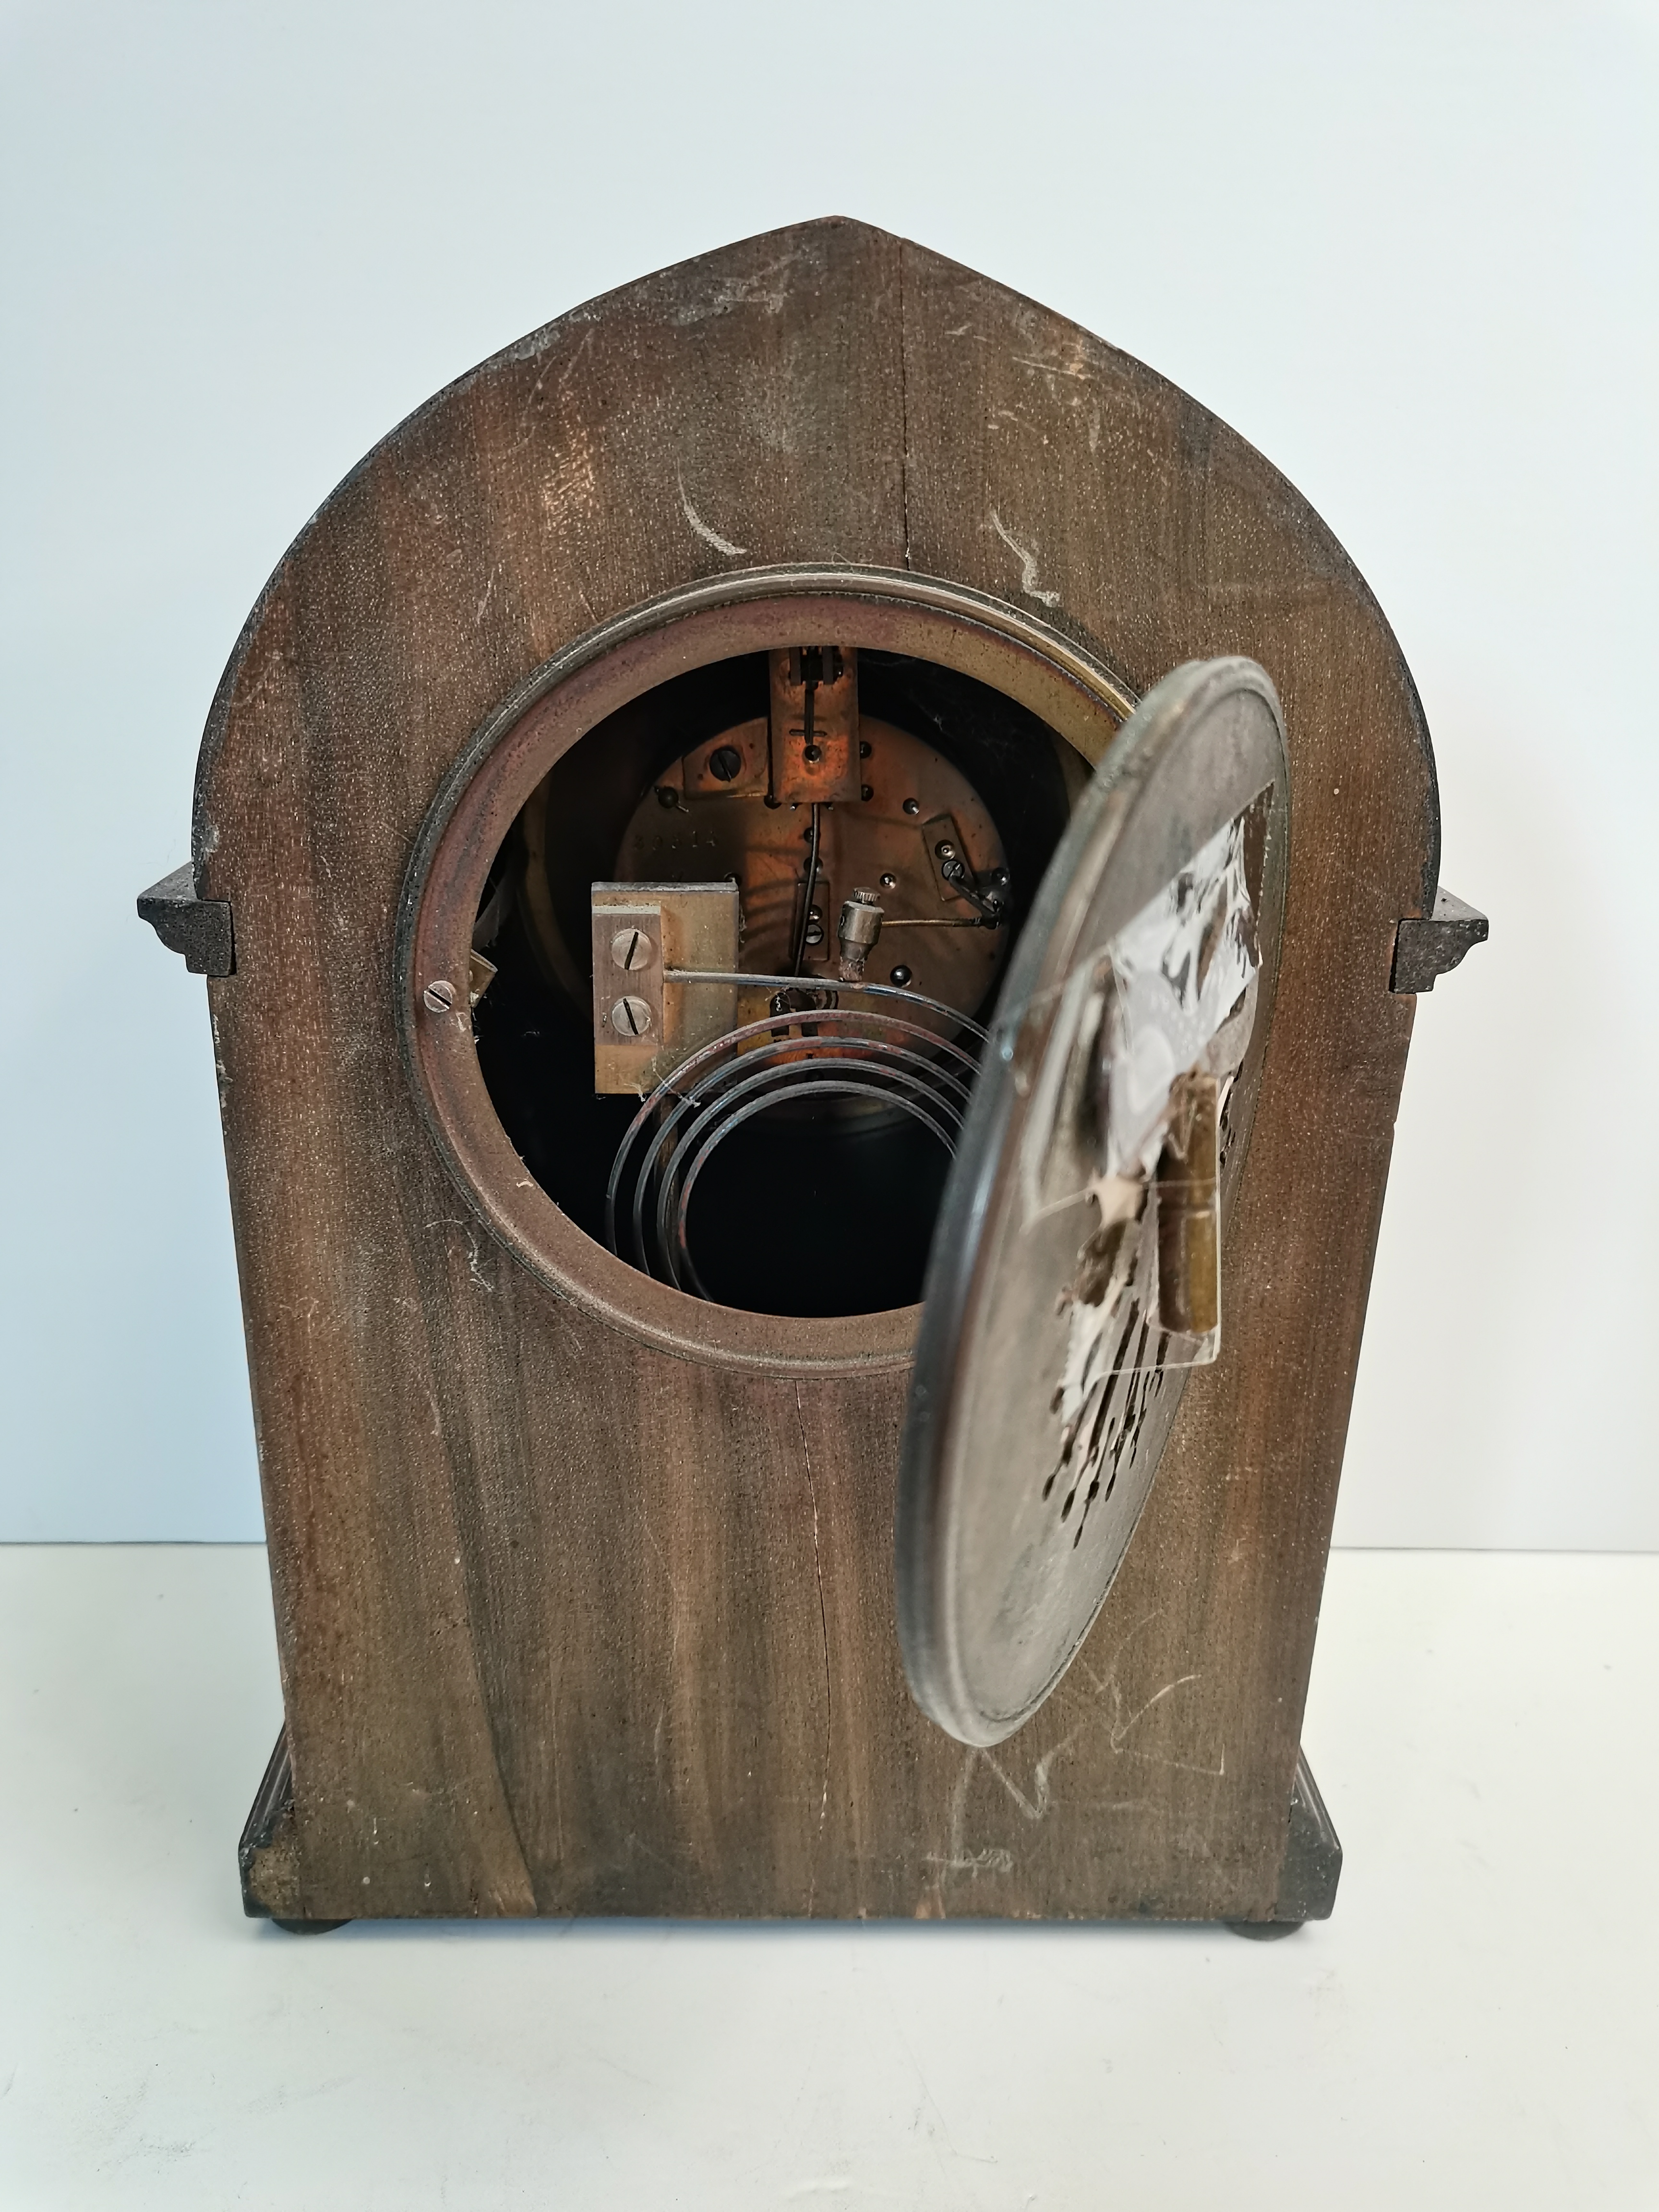 Edwardian mahogany Mantel Clock - D/D to face - Image 3 of 3